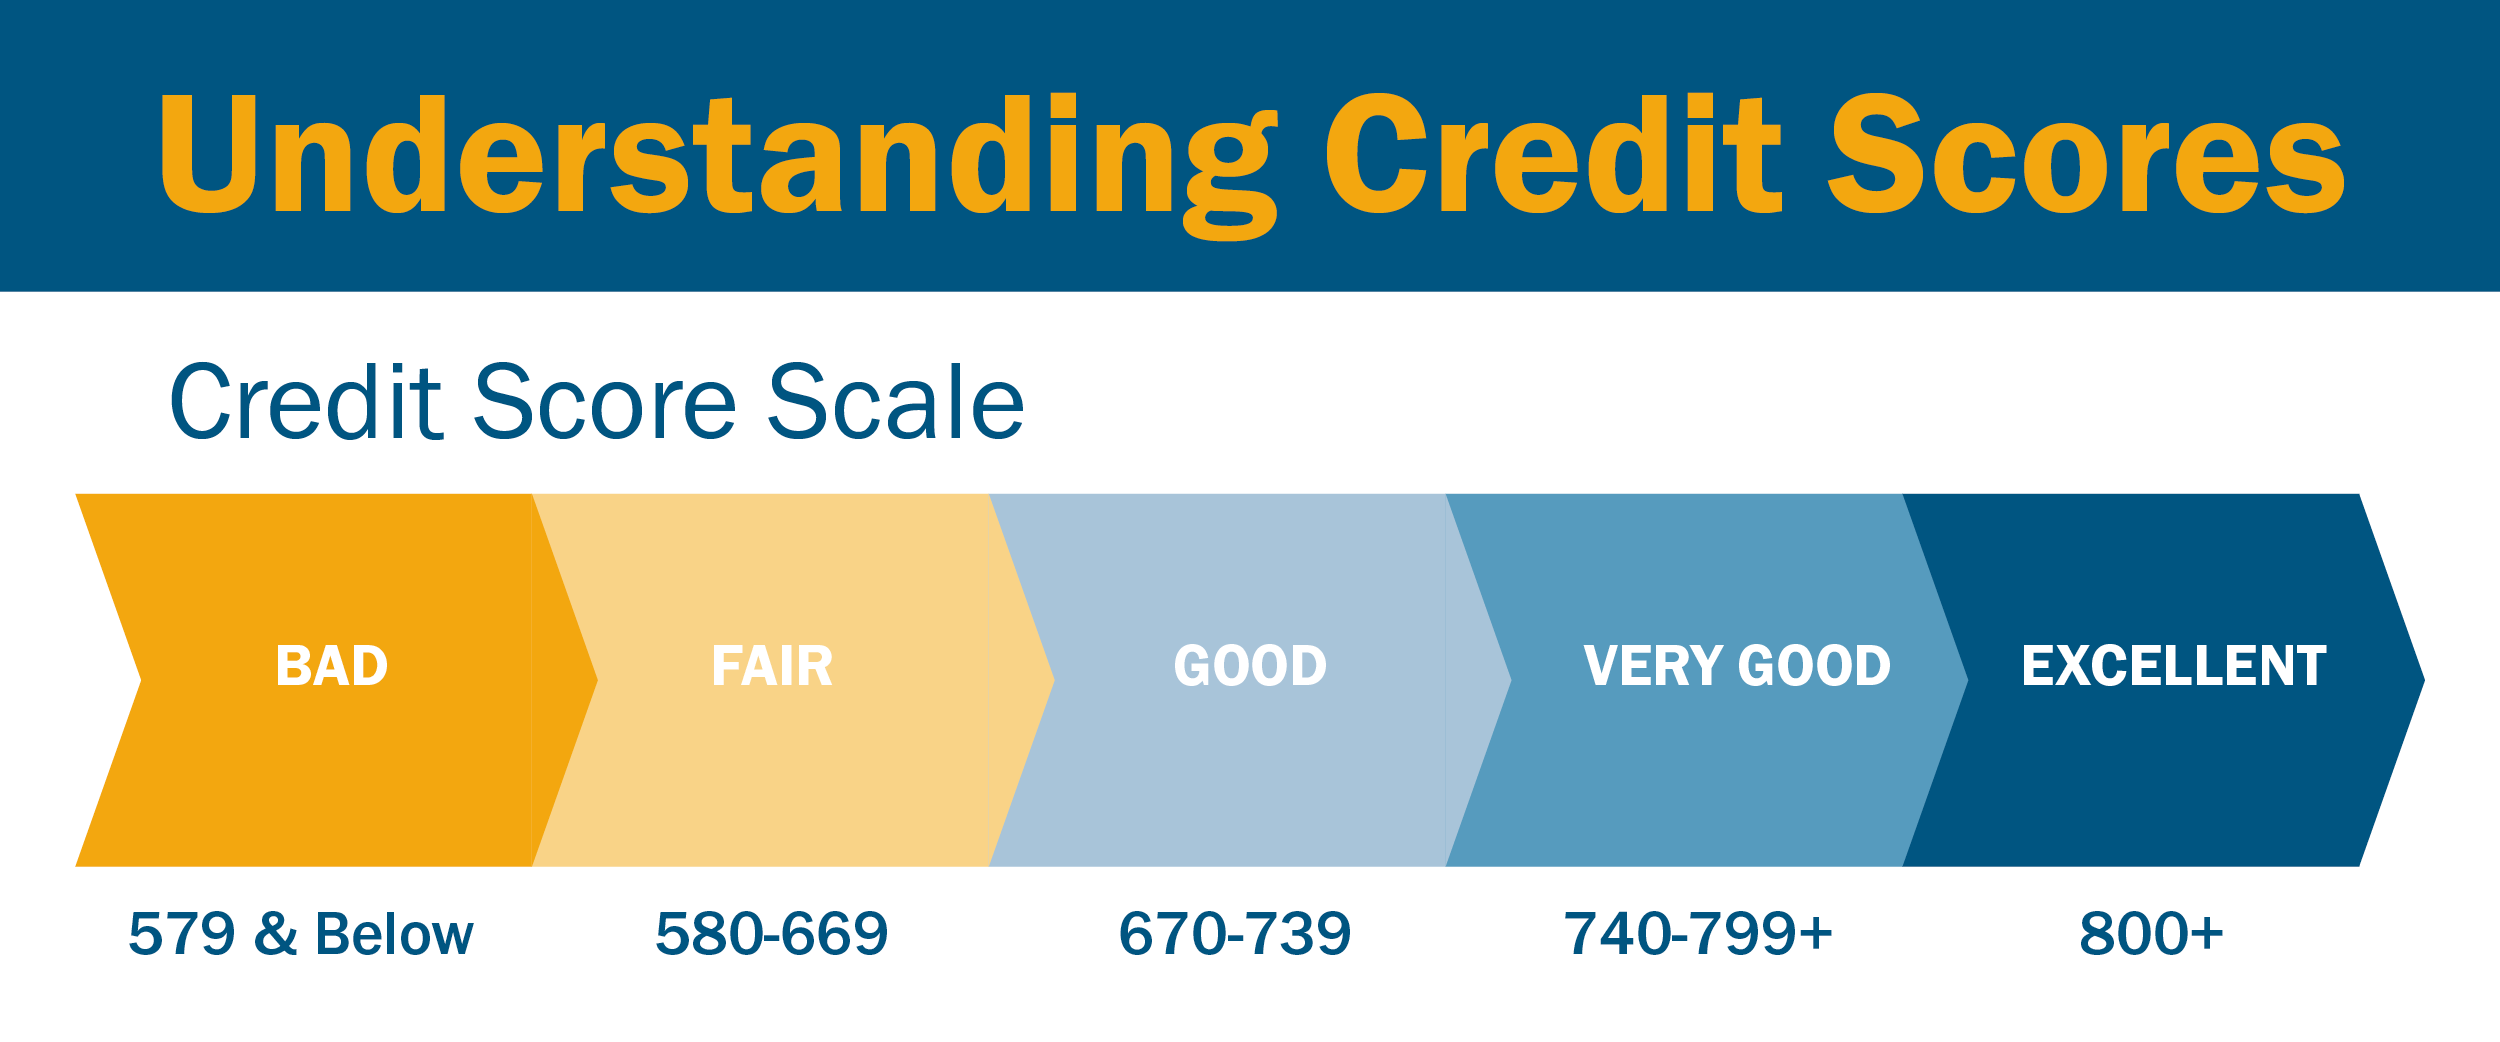 Credit score ranges agencybezy